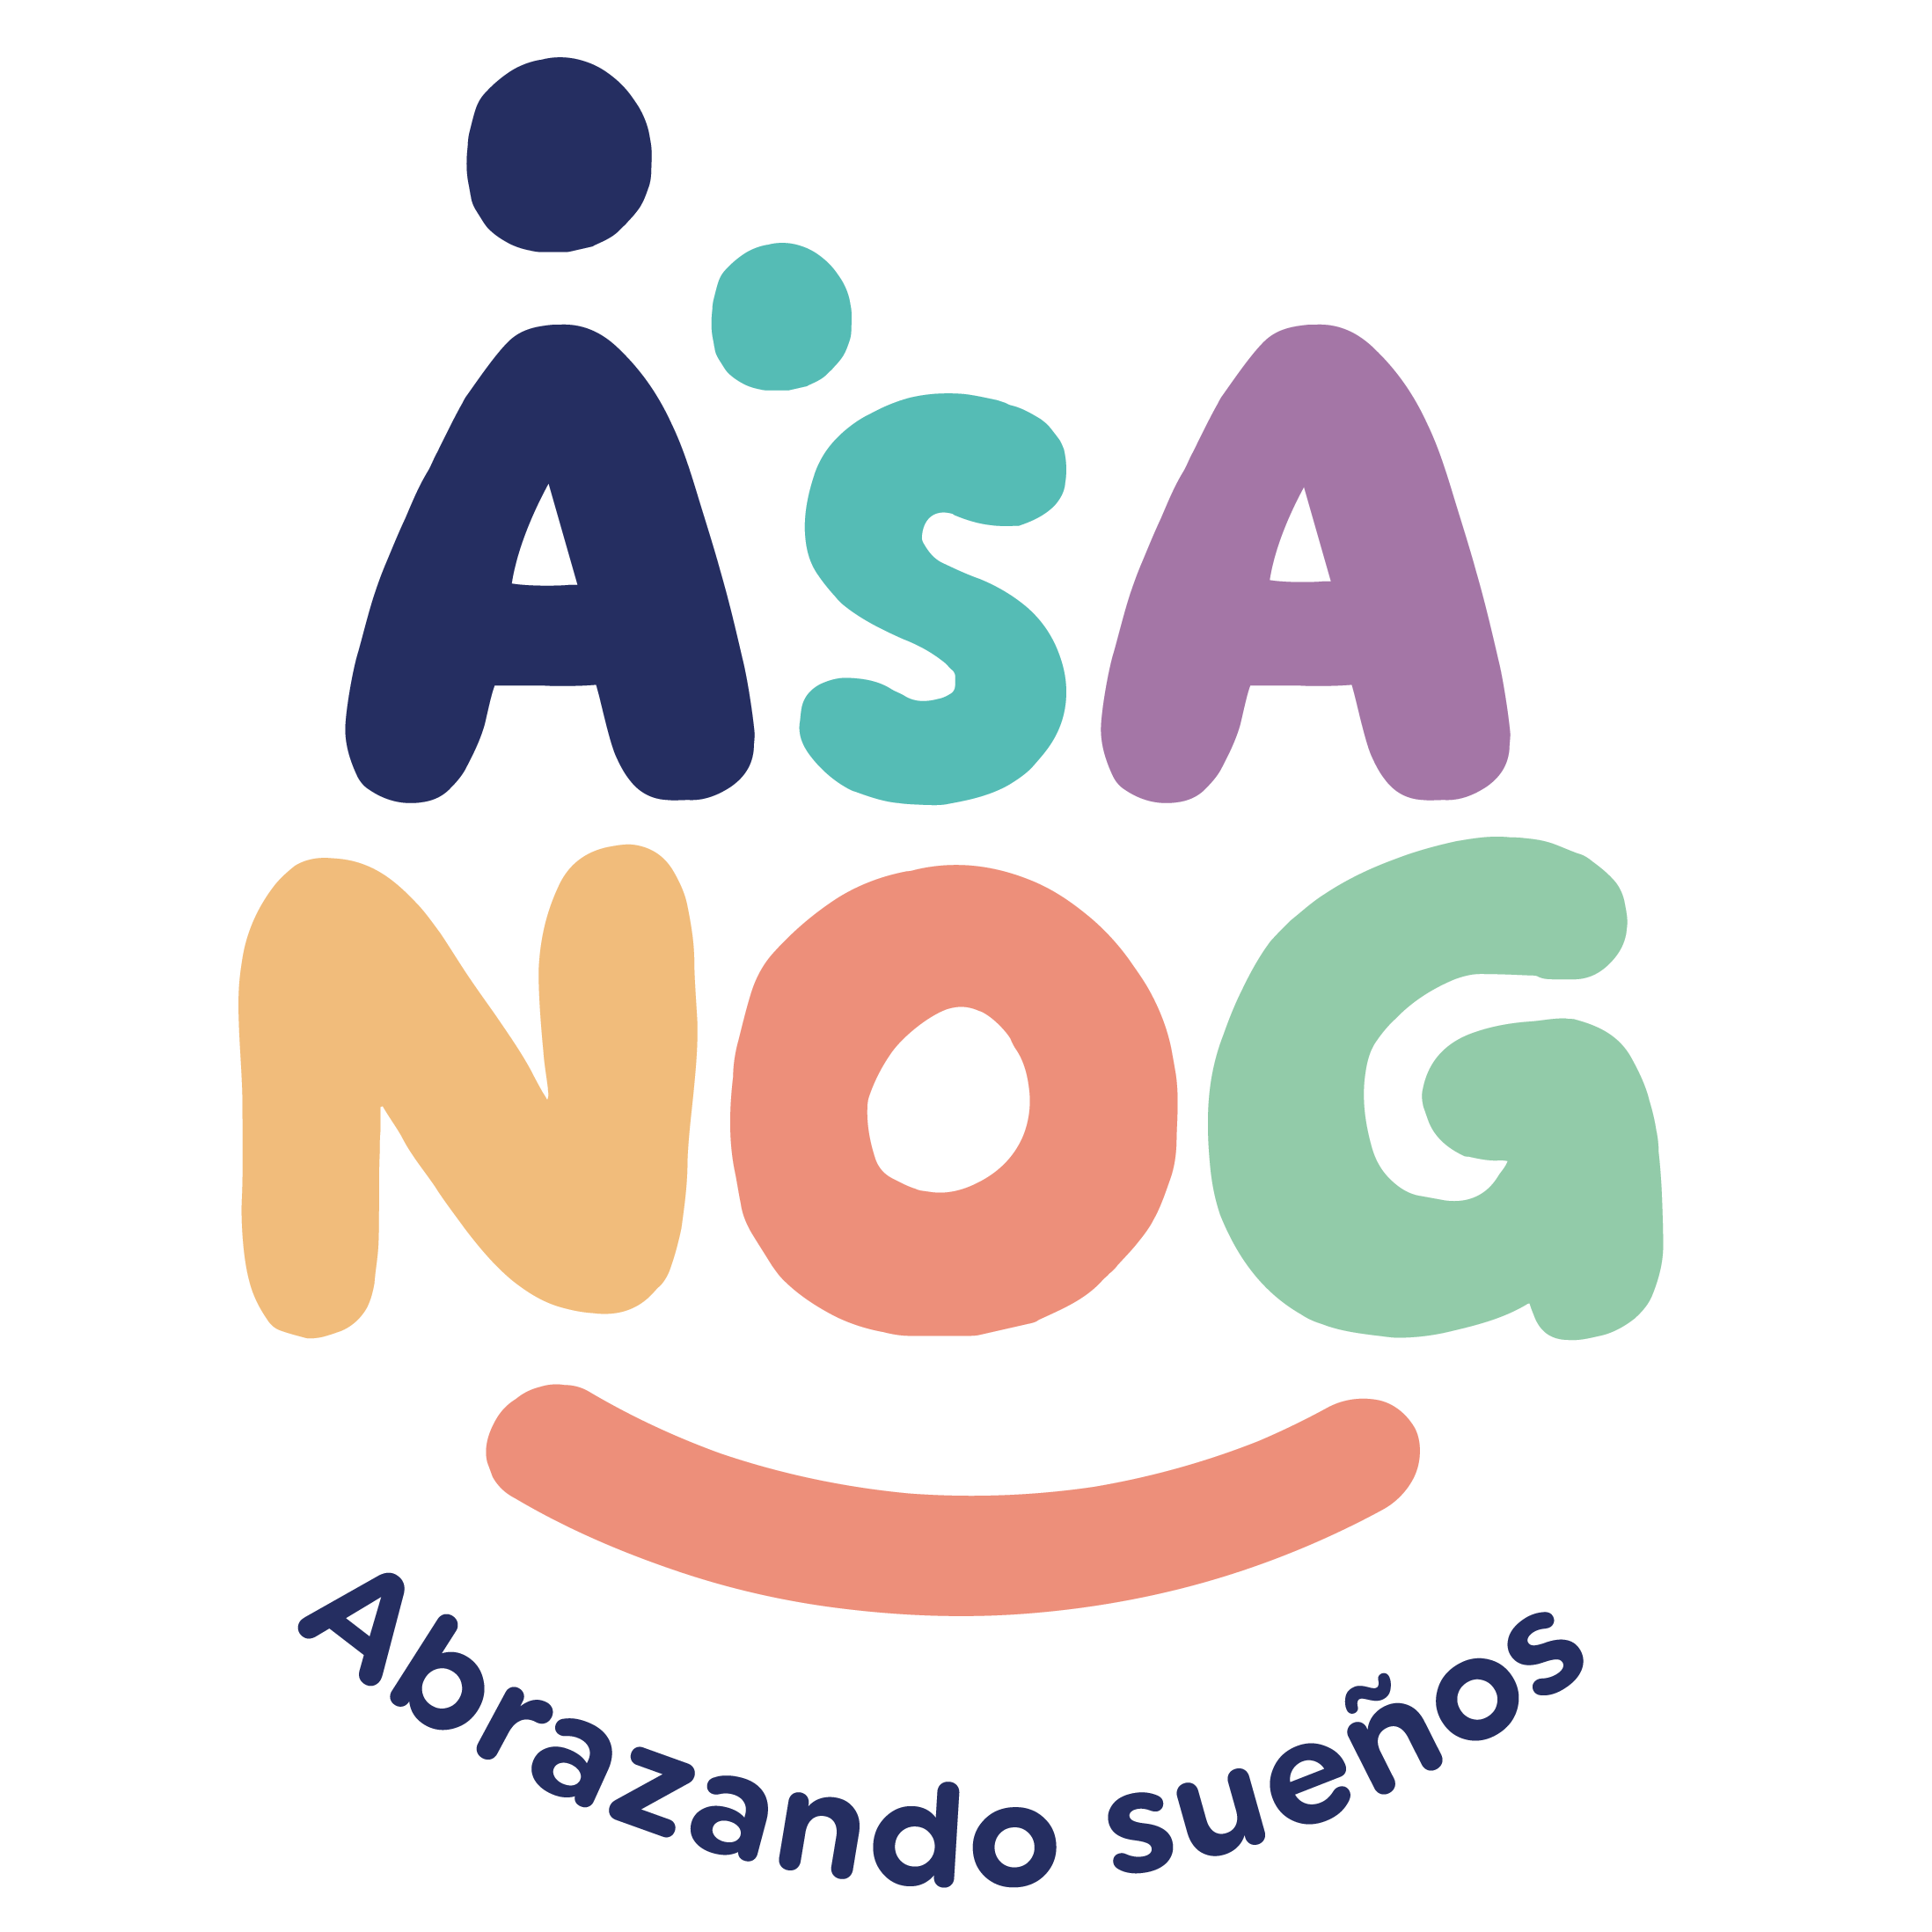 ASANOG - Asociación de Ayuda a Niños Oncológicos de Galicia